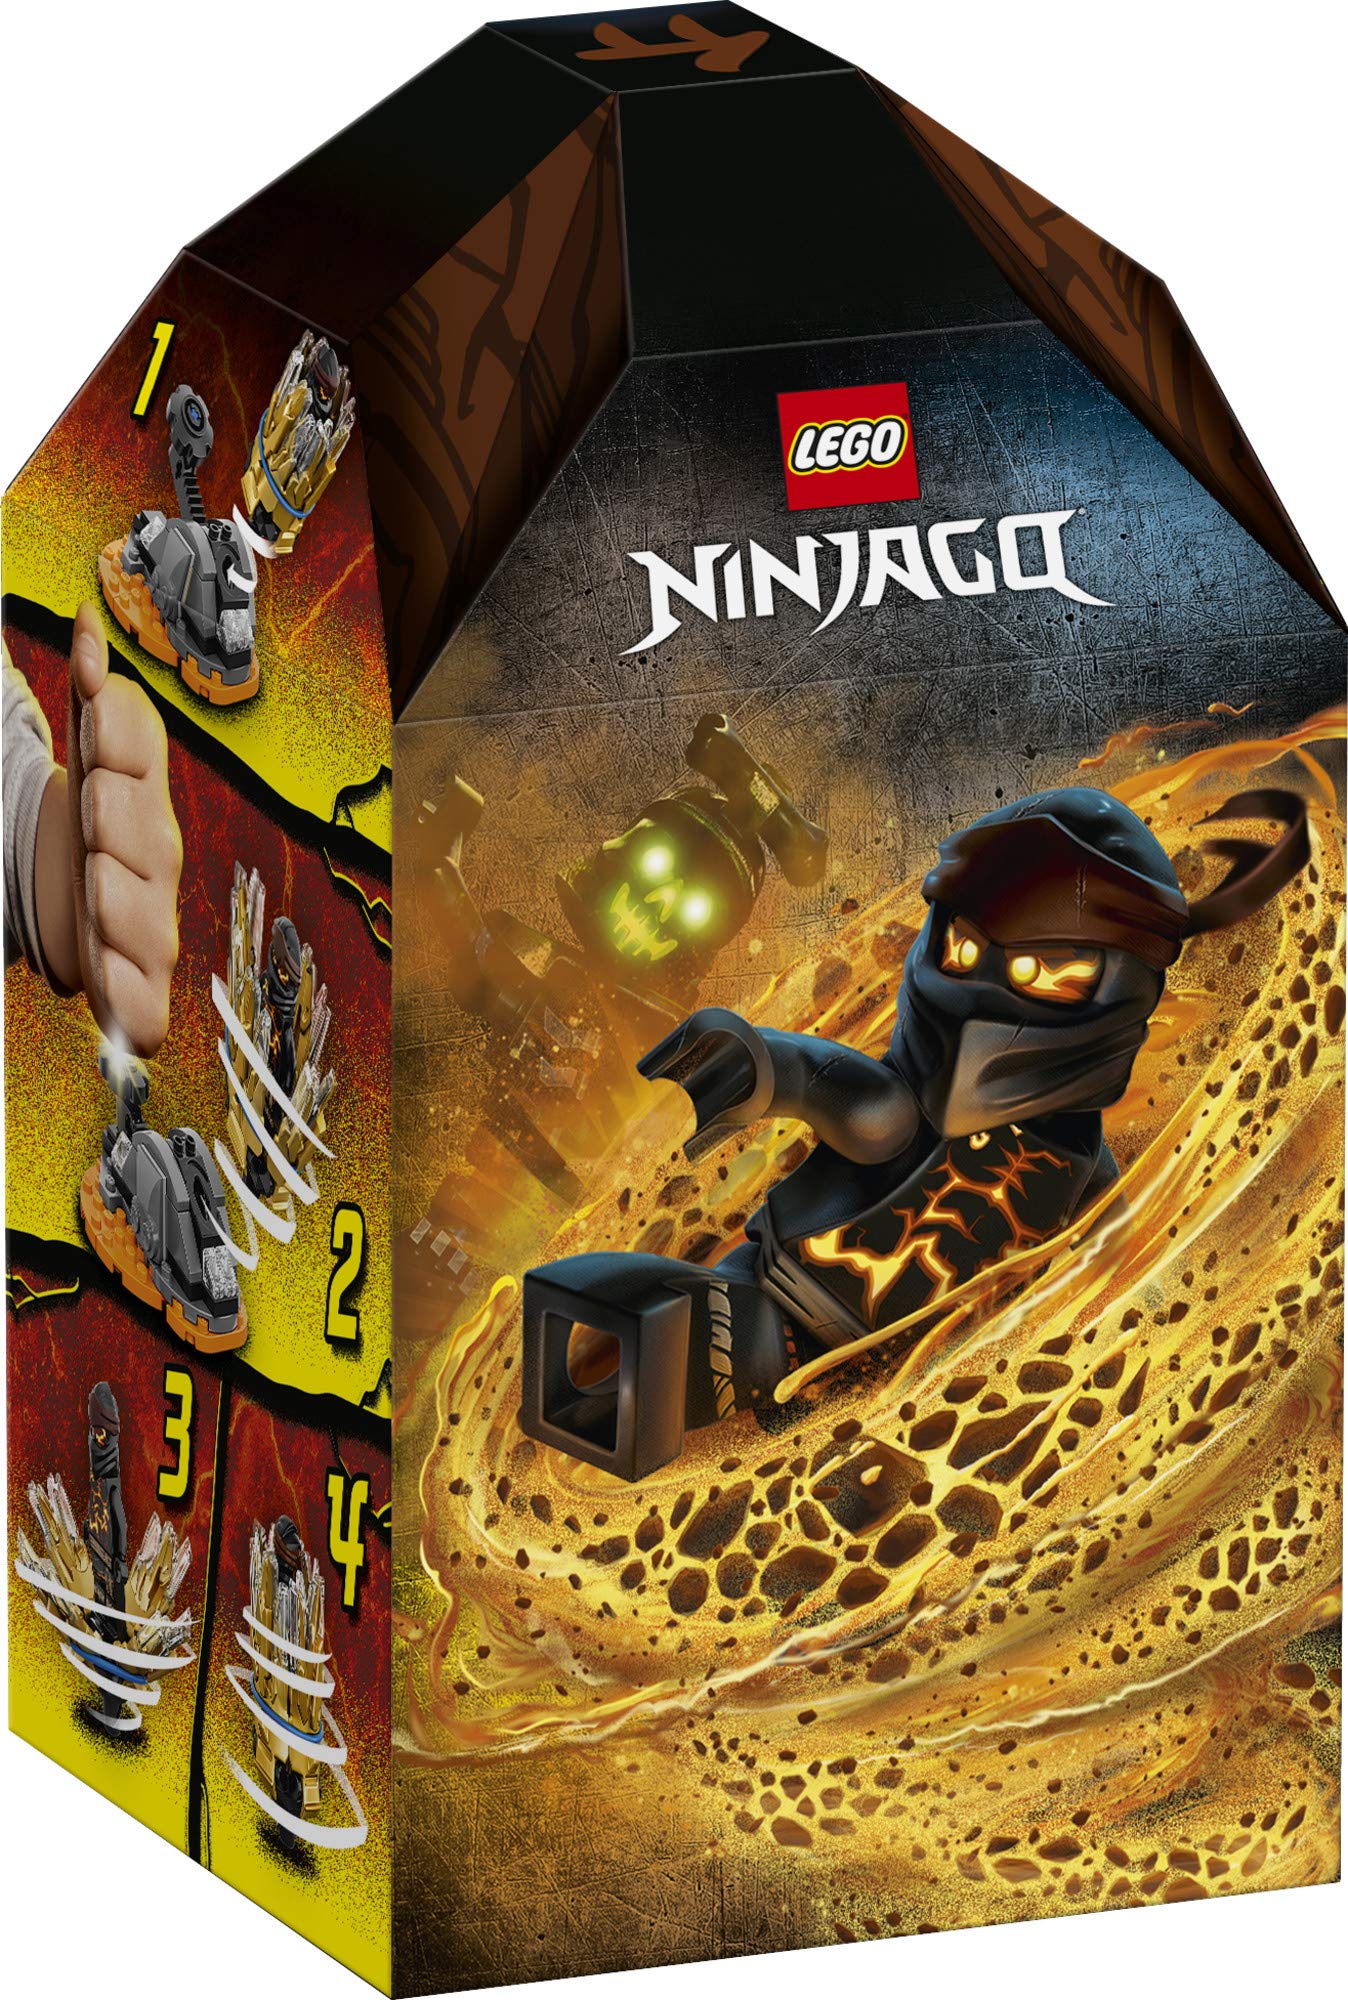 LEGO NINJAGO Spinjitzu Burst - Cole 70685 NINJAGO Accessory Set Building Kit Featuring Ninja Minifigure (48 Pieces)